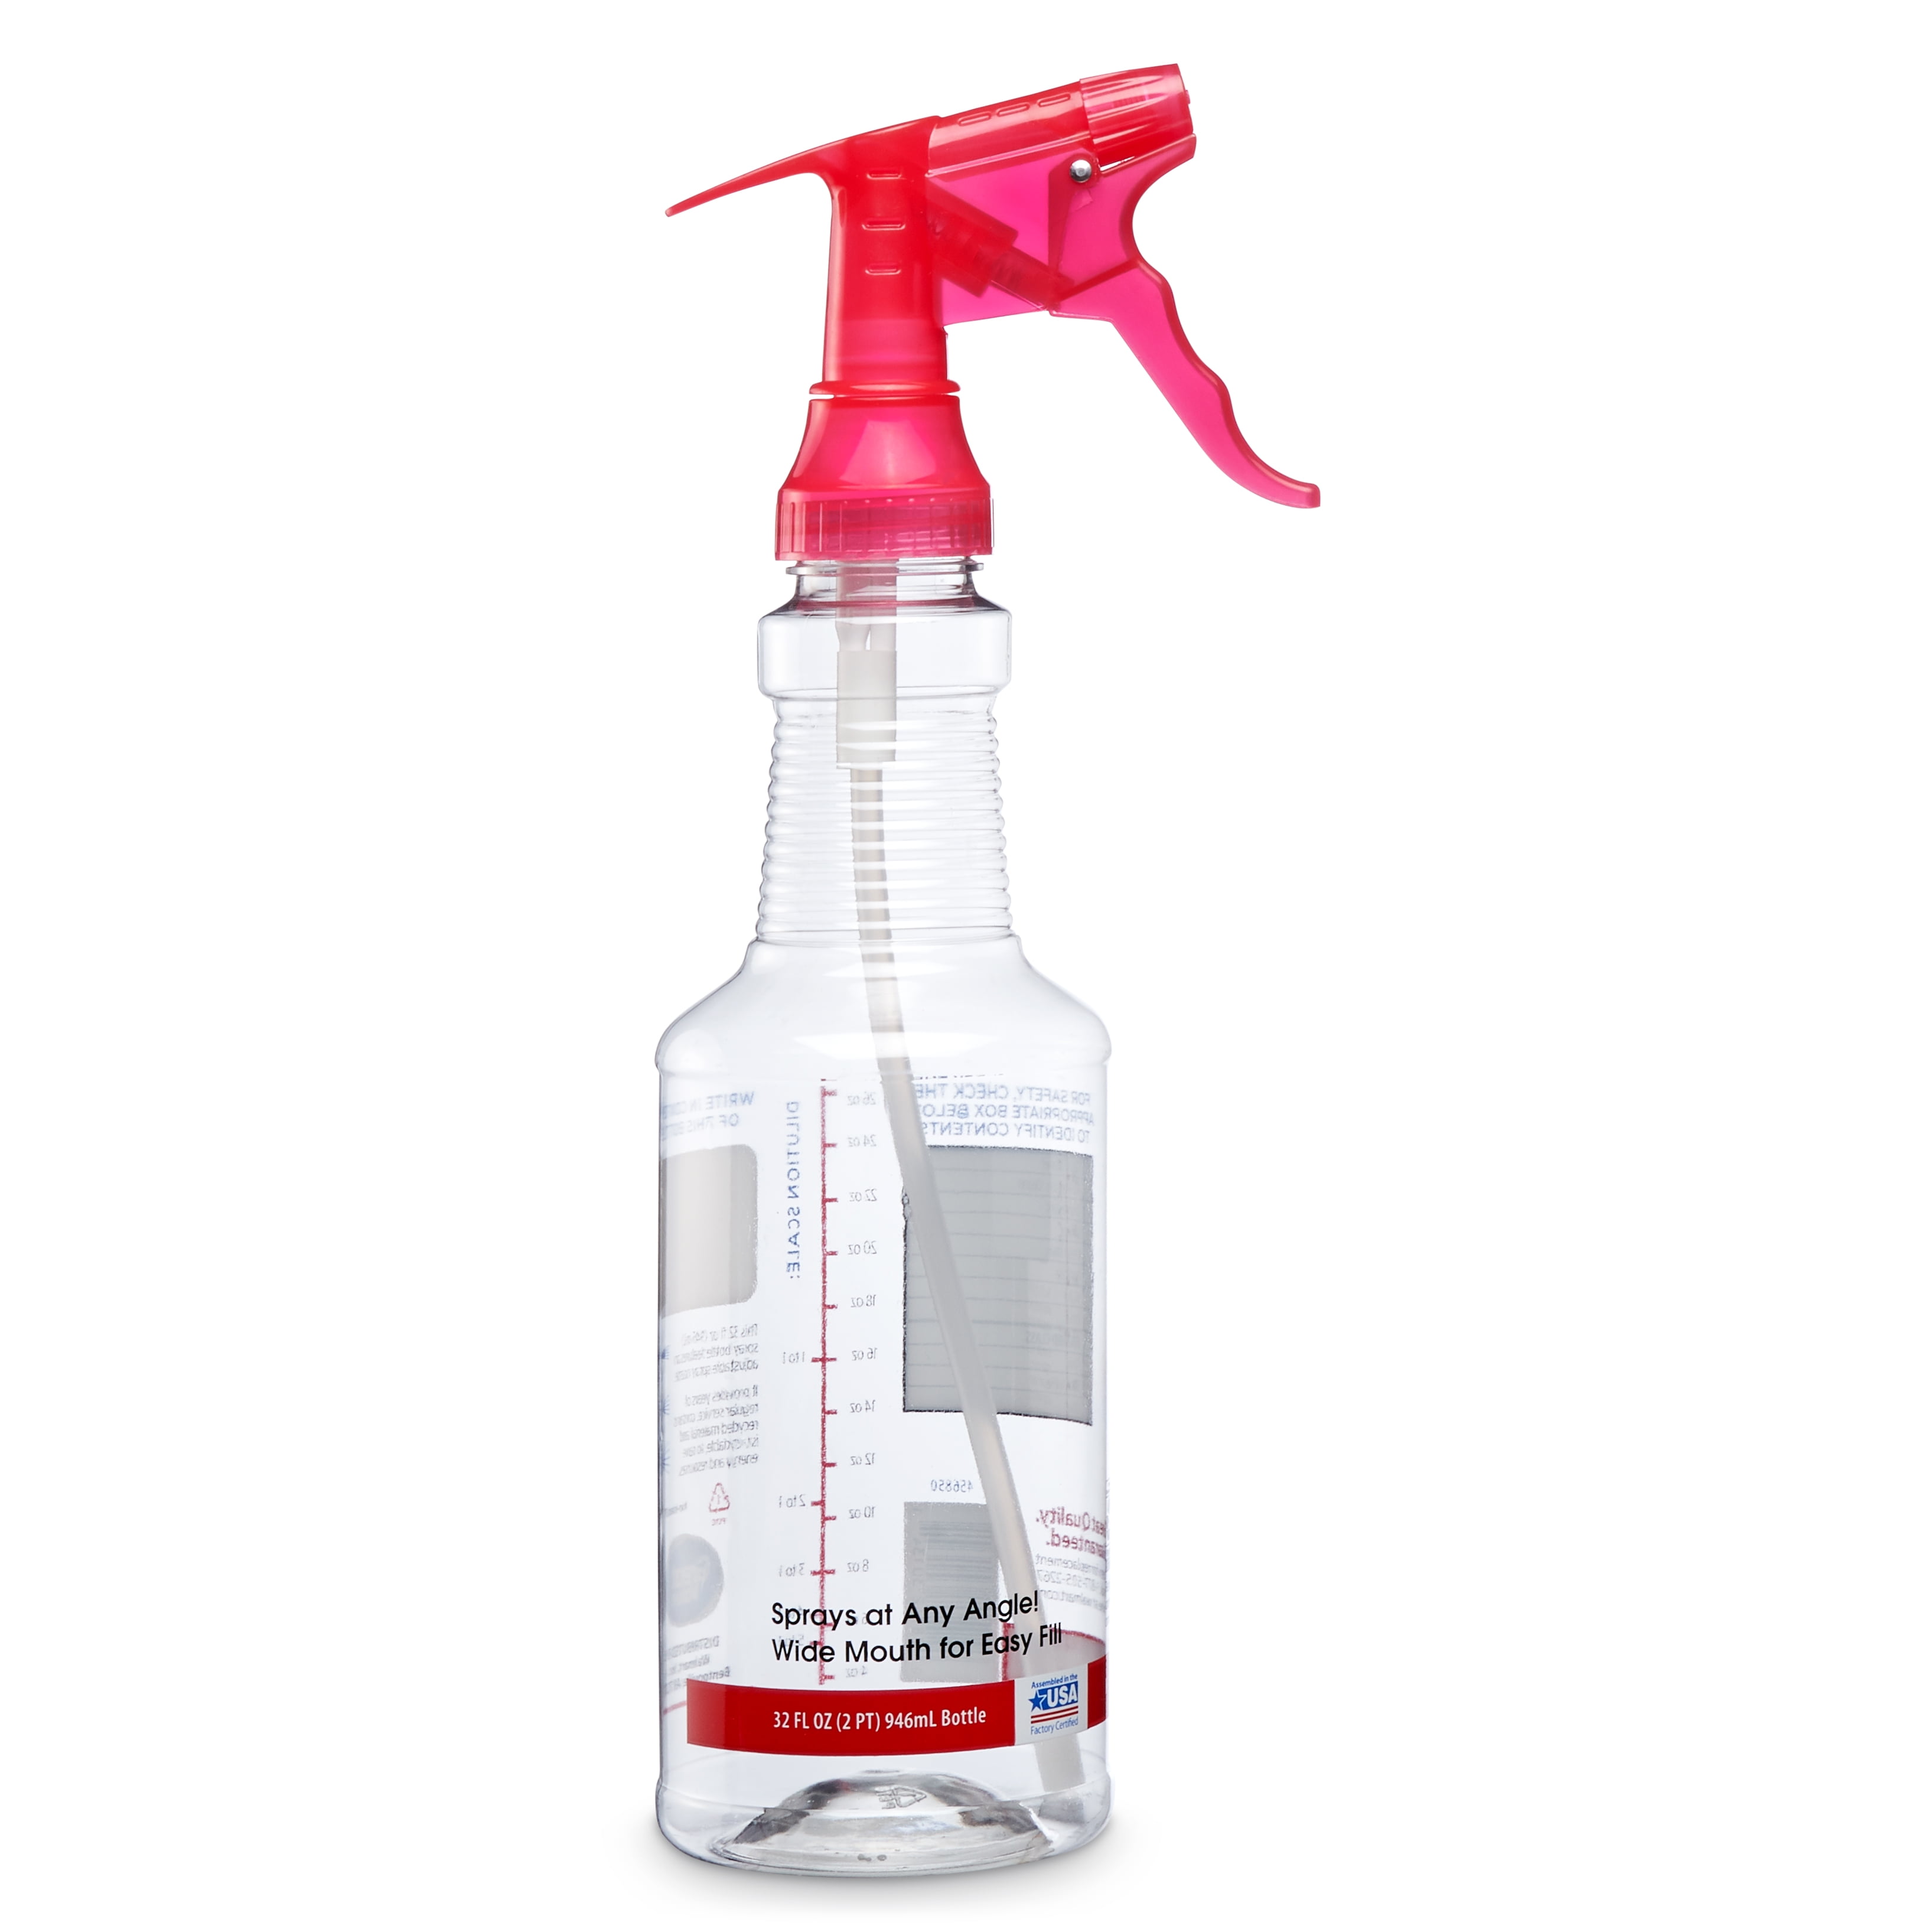 Meguiar's® Dispenser Bottle with Sprayer, M9911, 32 oz., empty